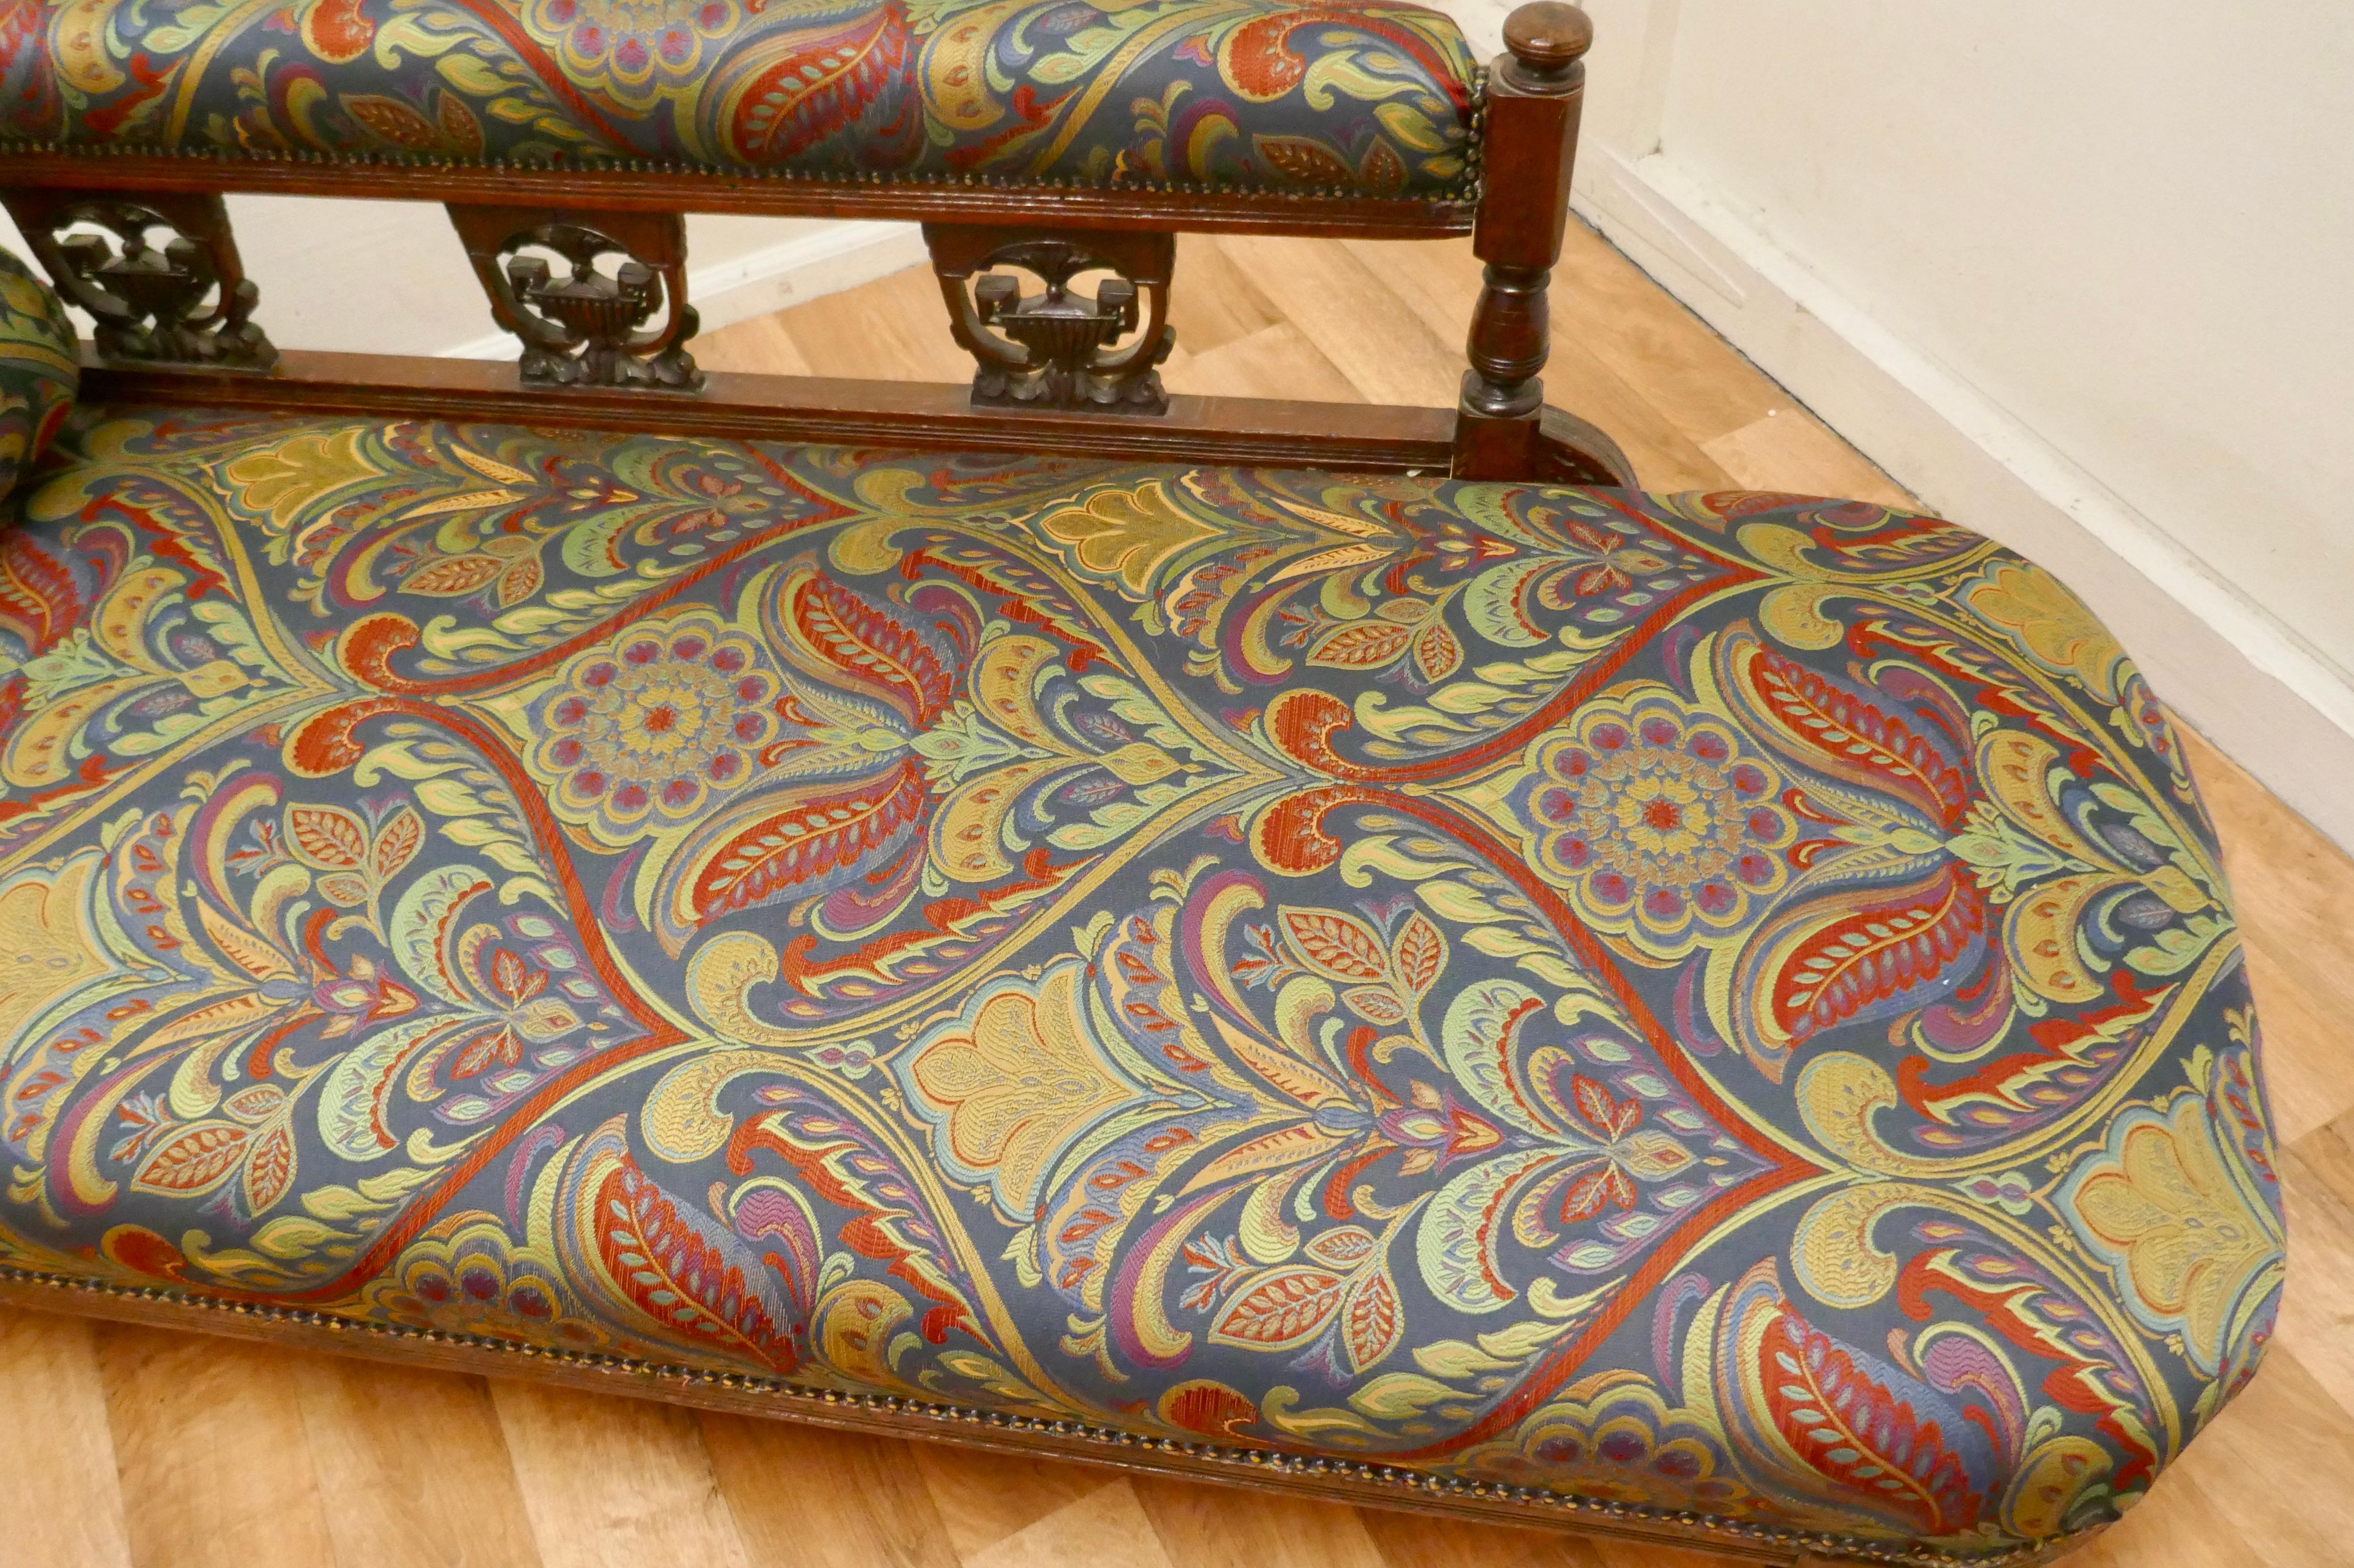 19th Century Victorian Art Nouveau Upholstered Chaise Longue For Sale